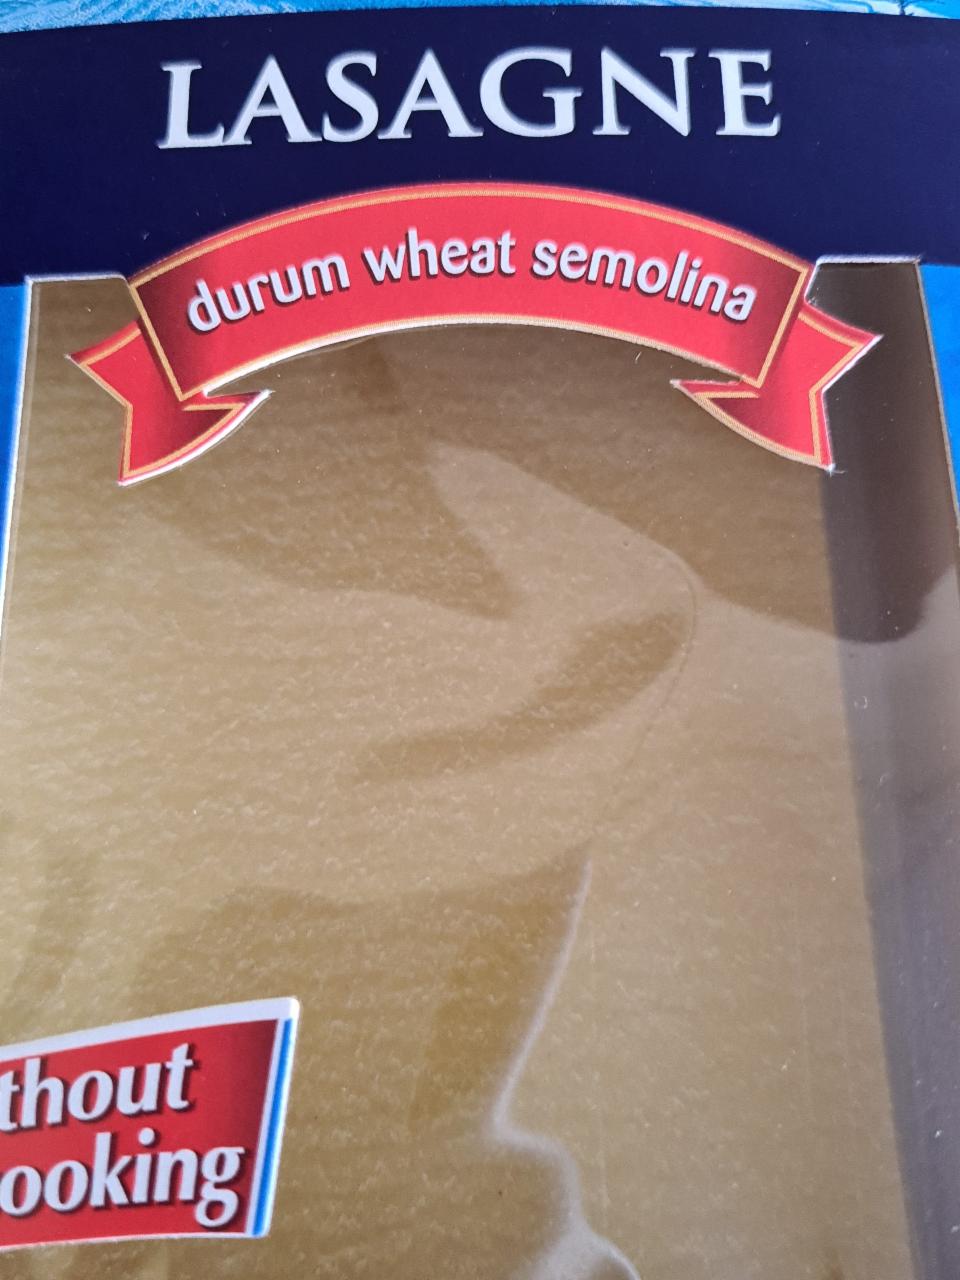 Zdjęcia - lasagne durum wheat semolina